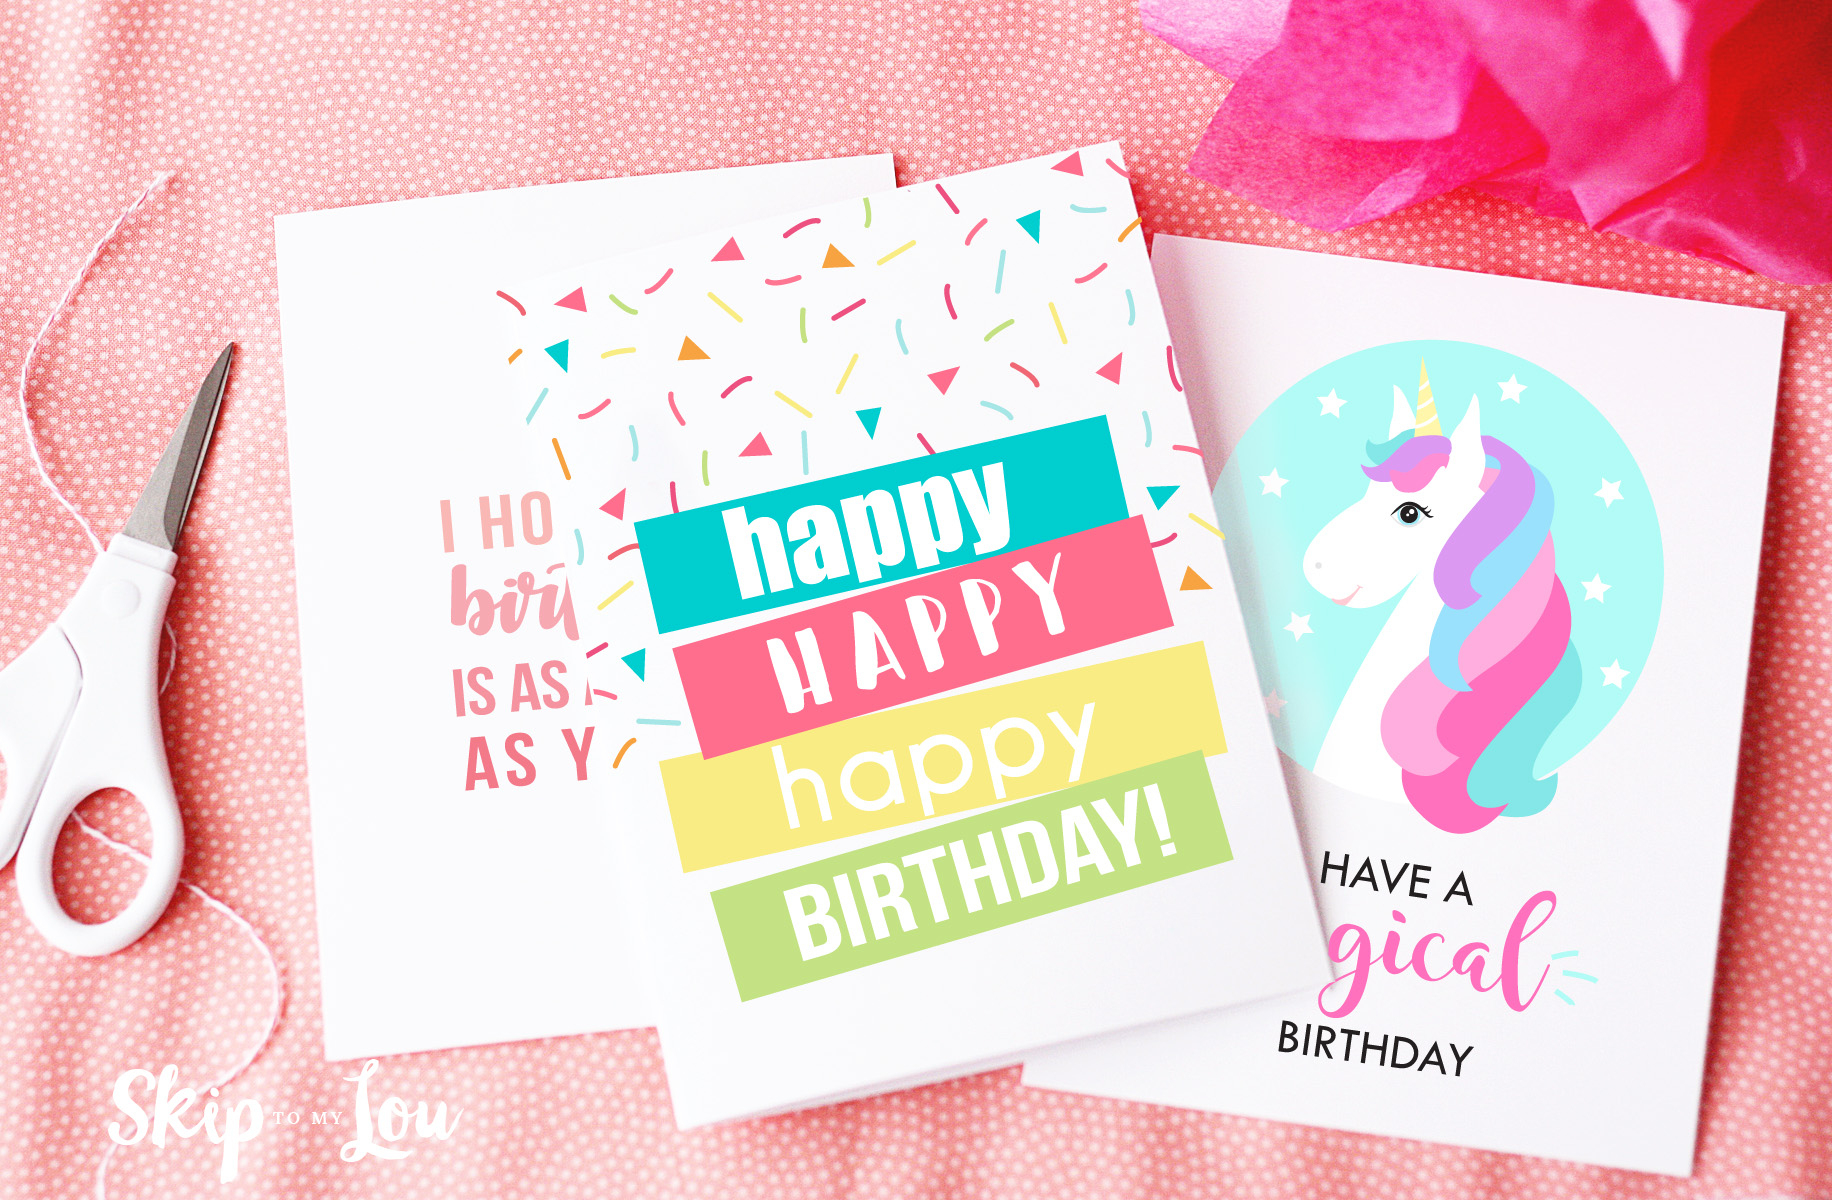 Free Printable Birthday Cards | Skip To My Lou - Free Printable Birthday Cards For Her